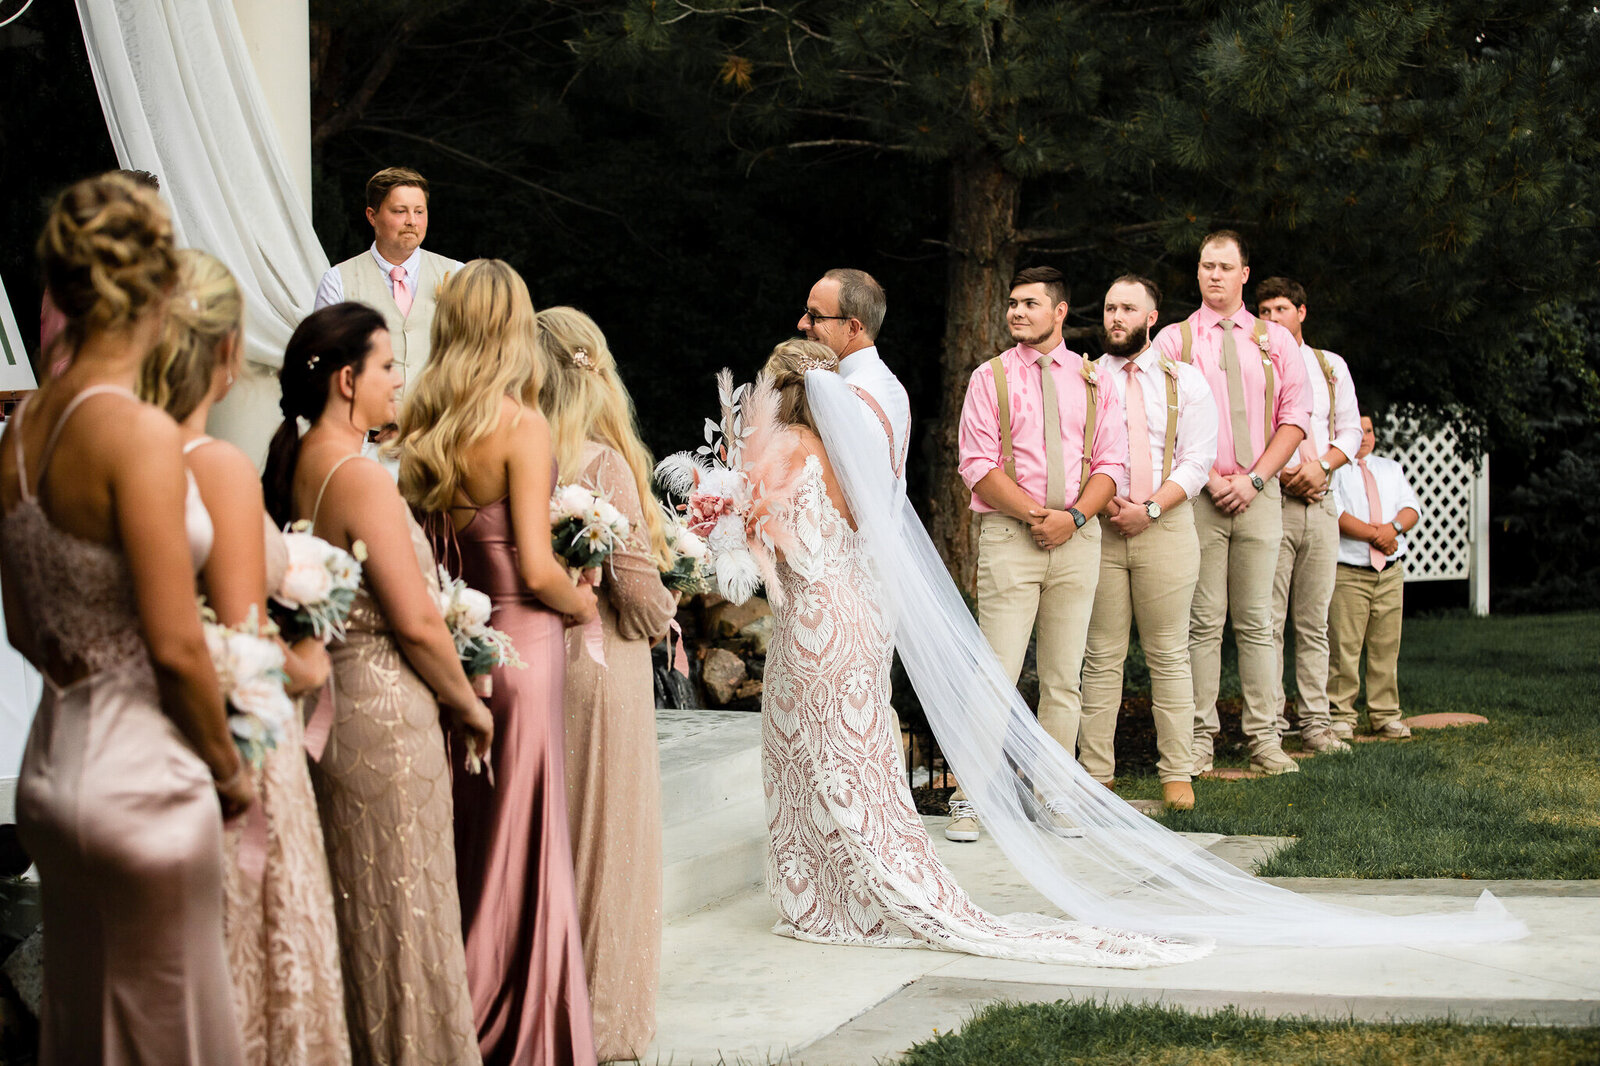 Wedding photographer near Turley Oklahoma | Modern Moments Photographer